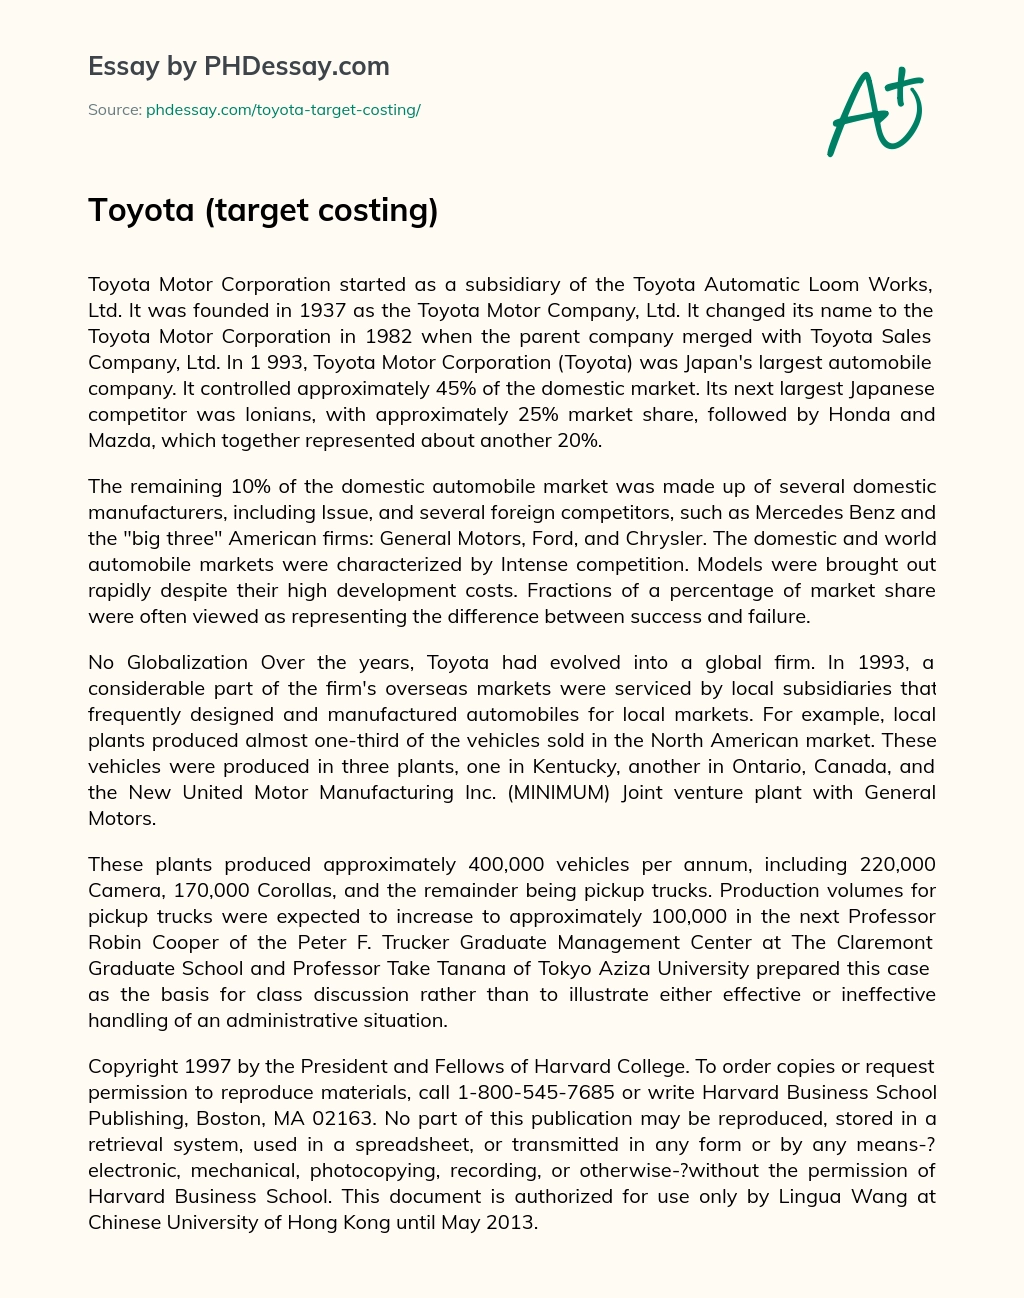 Toyota (target costing) essay